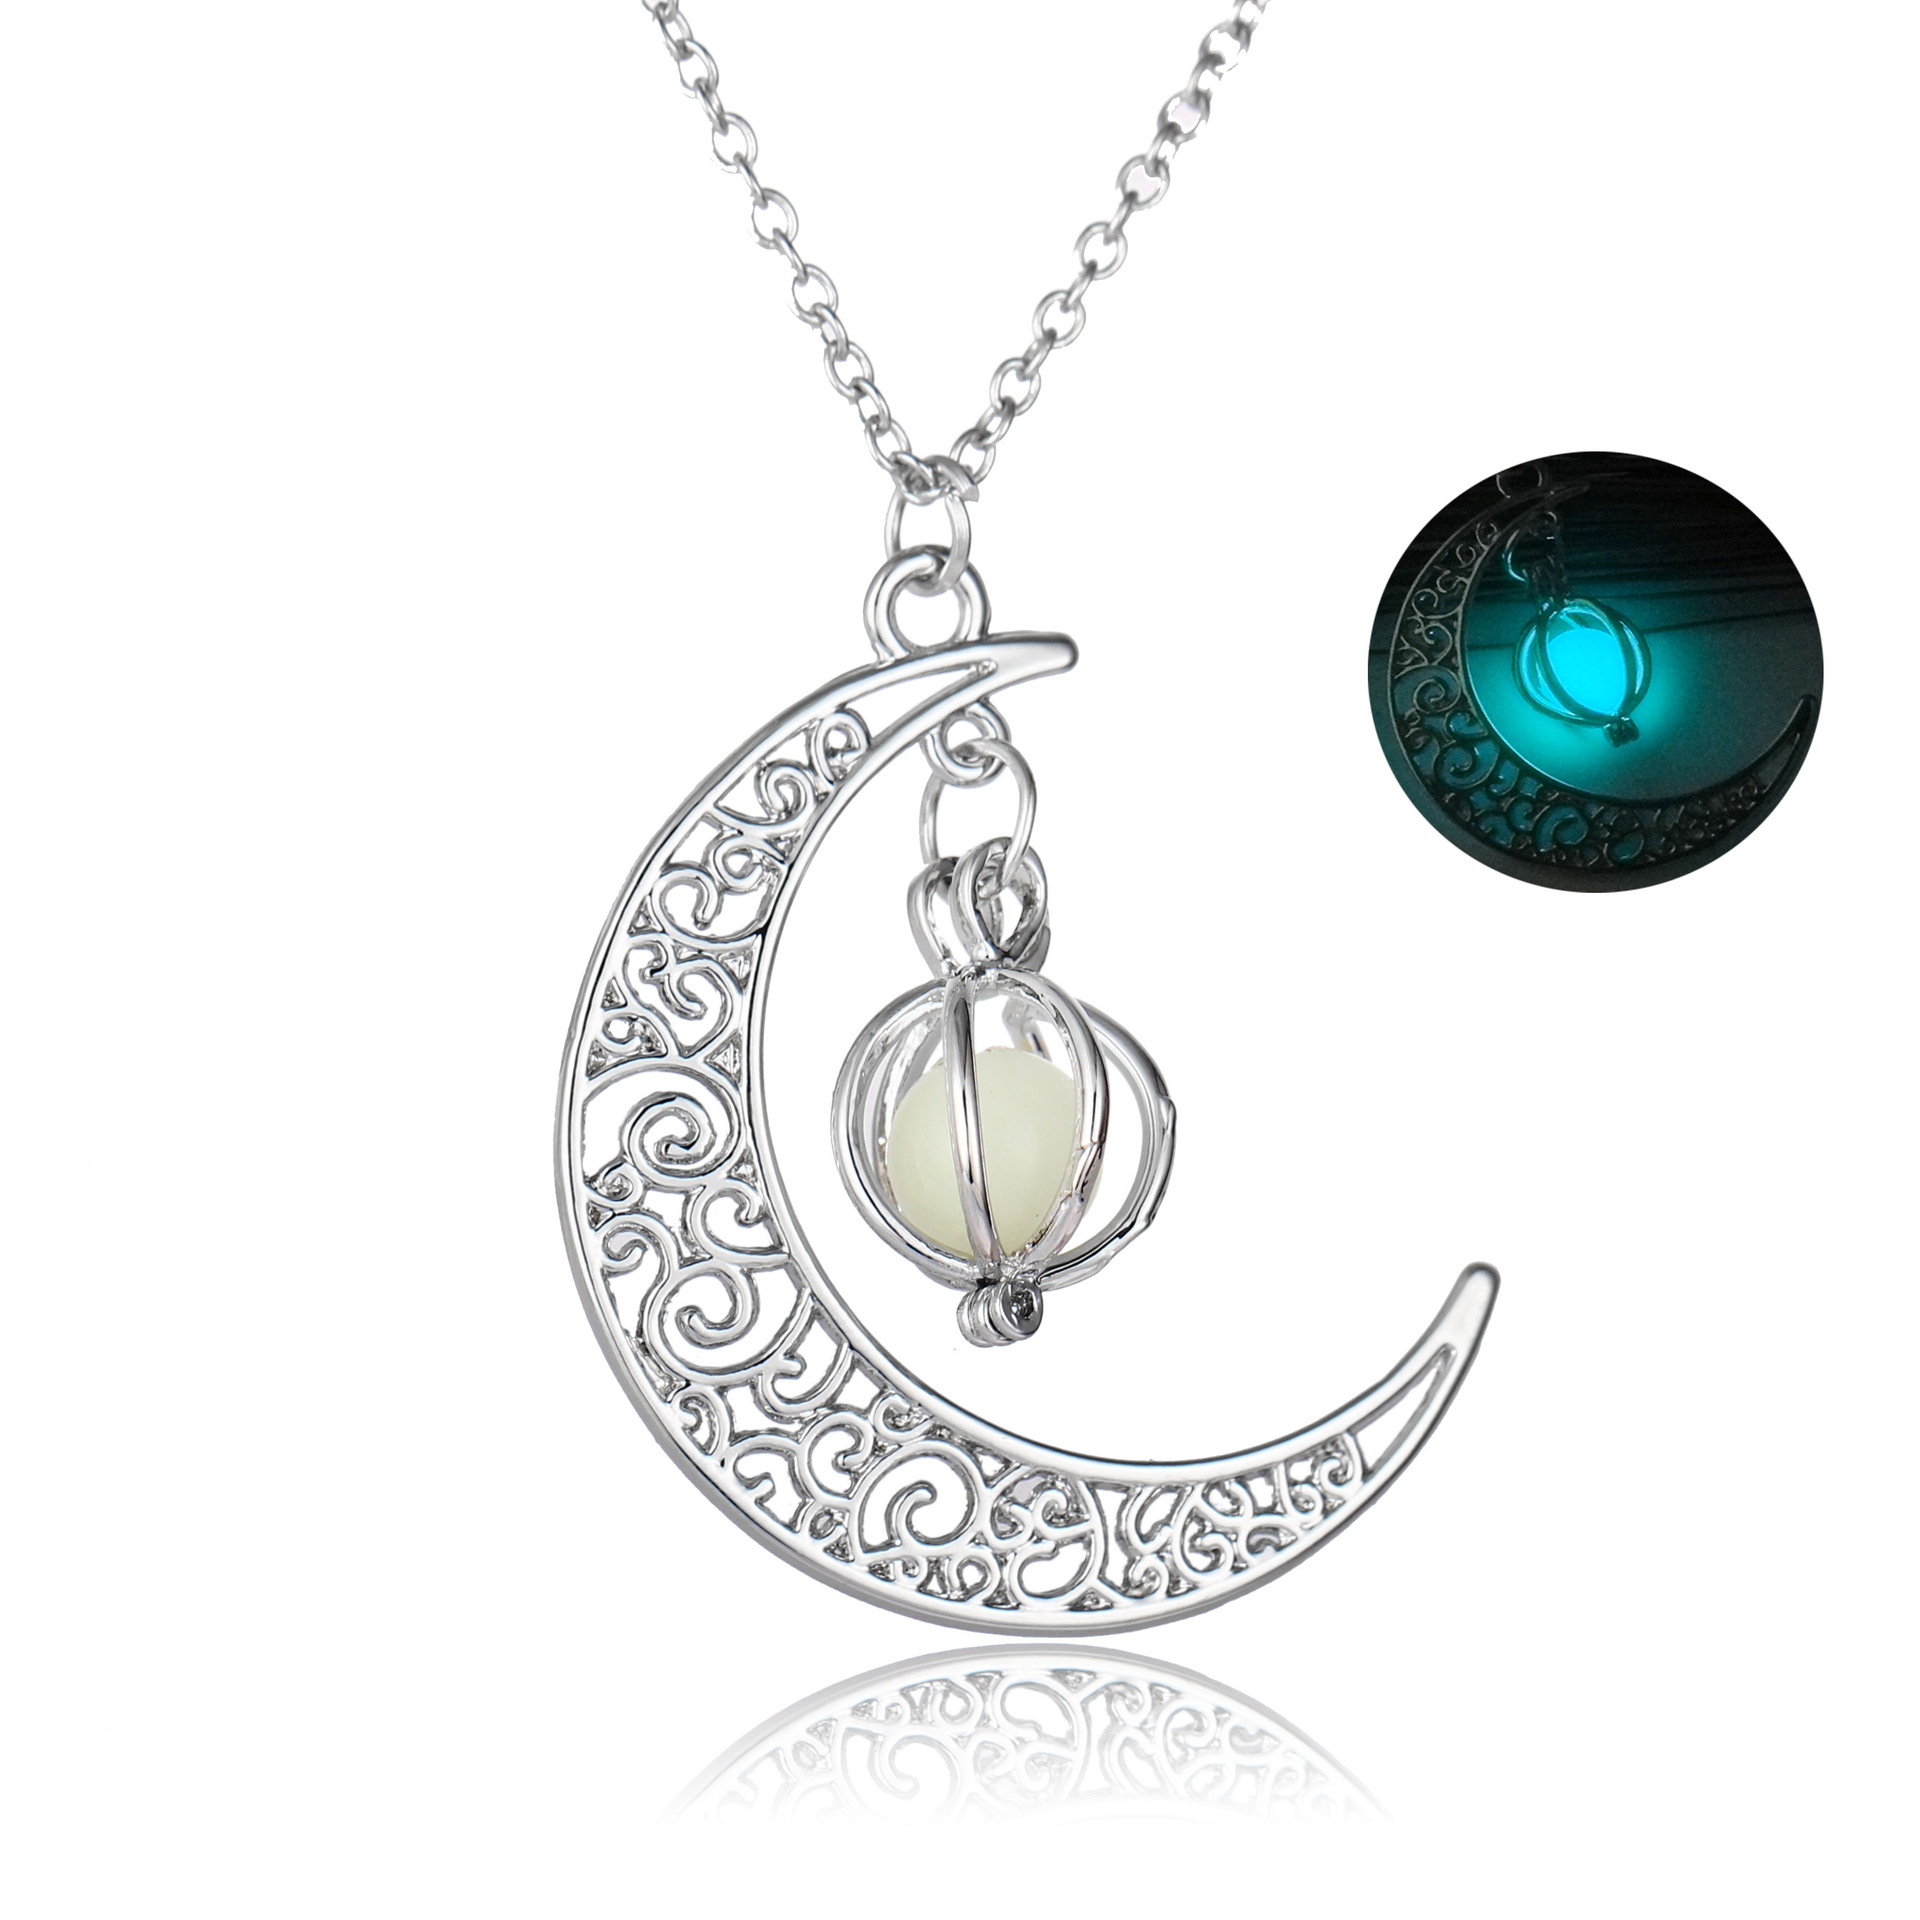 Fashion Moon Natural Glowing Stone Healing Necklace Women Gift Charm Luminous Pendant Necklace Jewelry